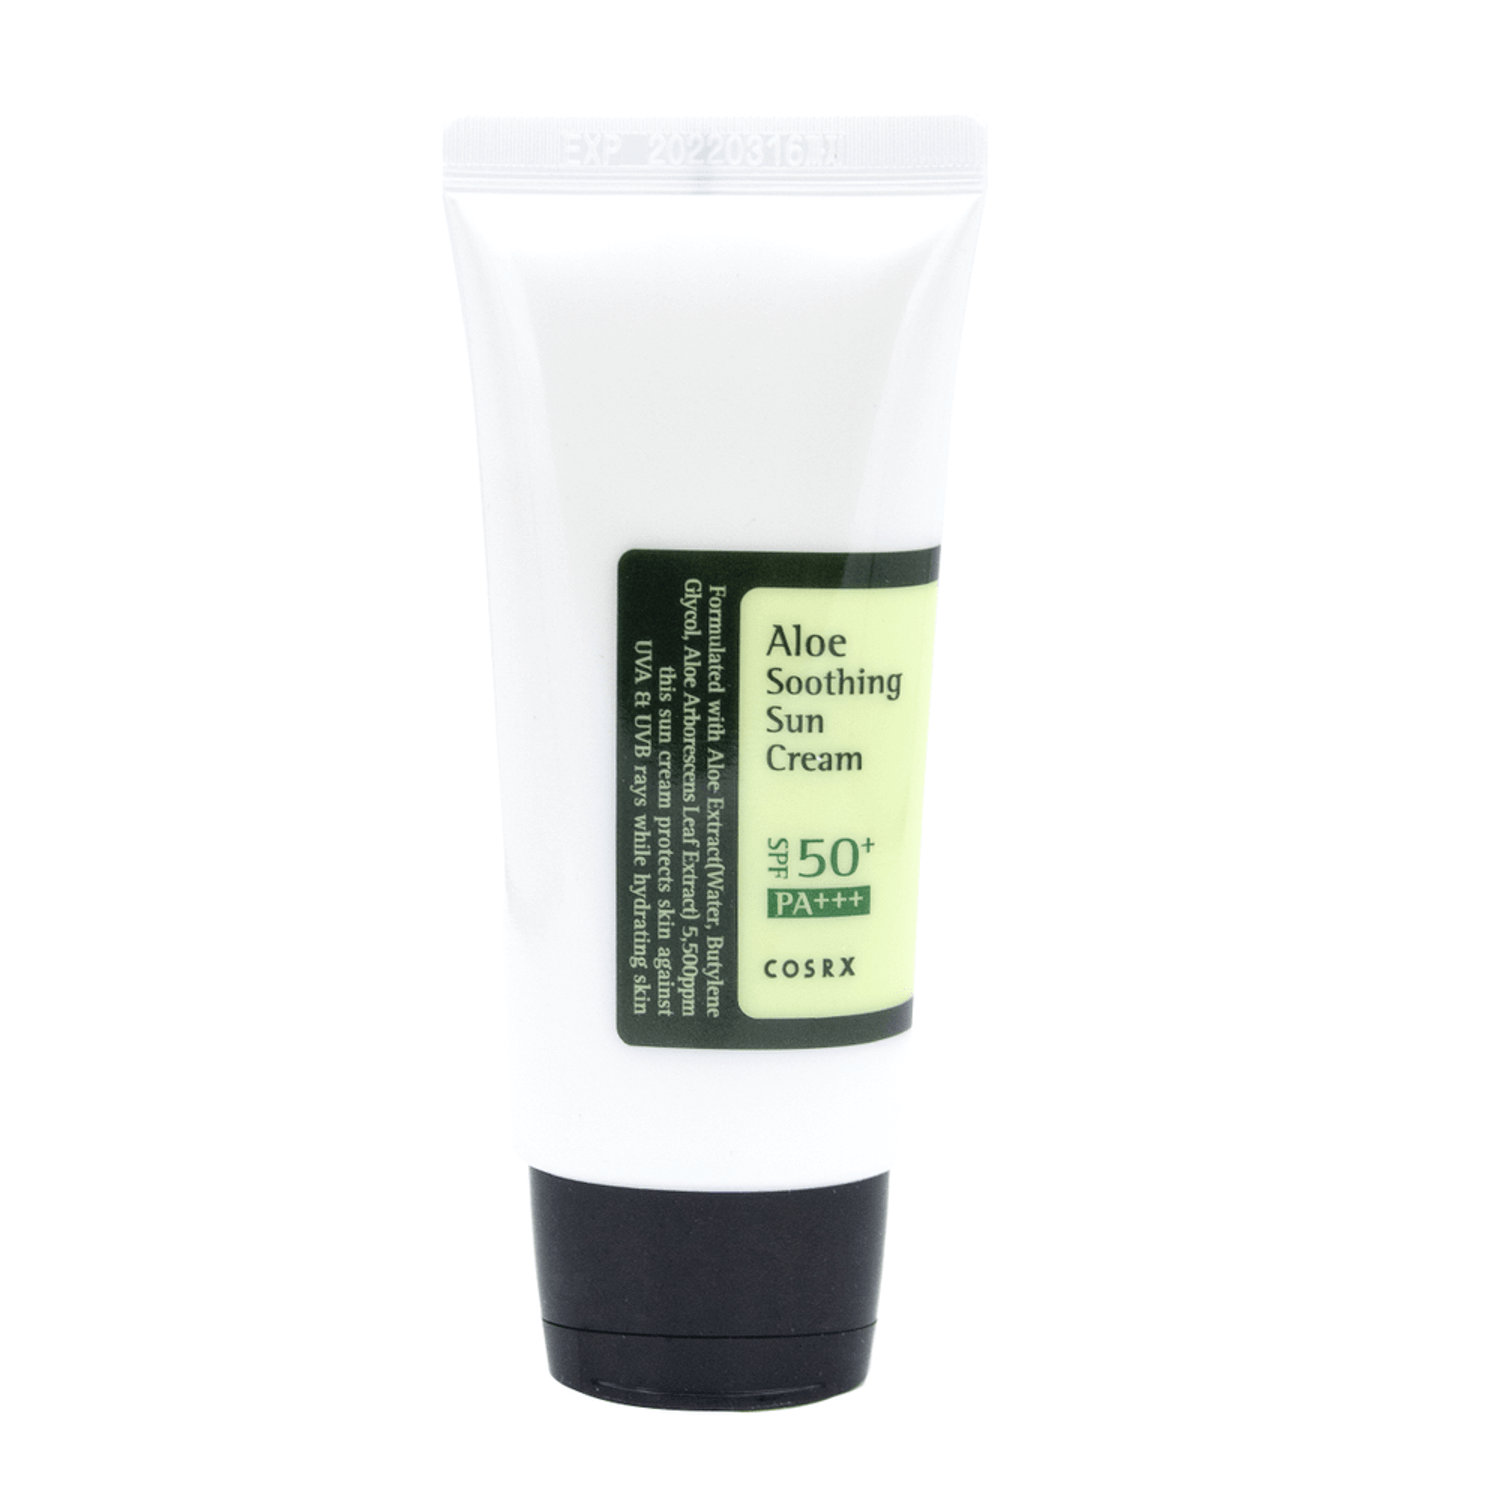 Крем солнцезащитный COSRX для лица с алоэ Aloe Soothing Sun Cream Spf50 PA+++ 50 мл - фото 1